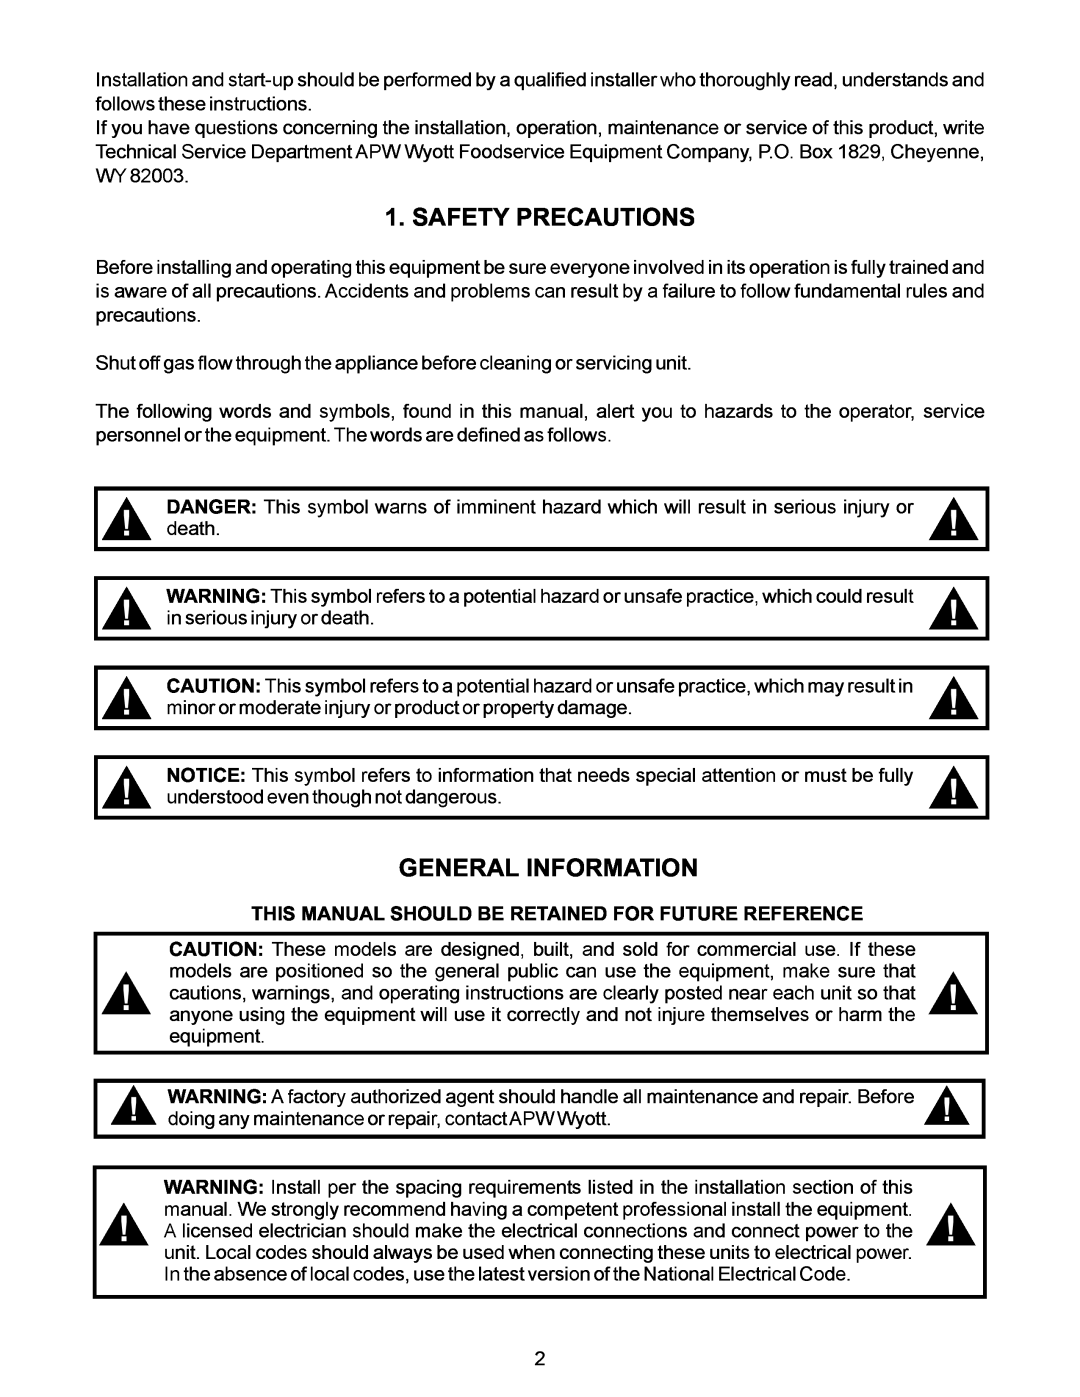 APW Wyott GWW installation instructions Safety Precautions, General Information, Danger 